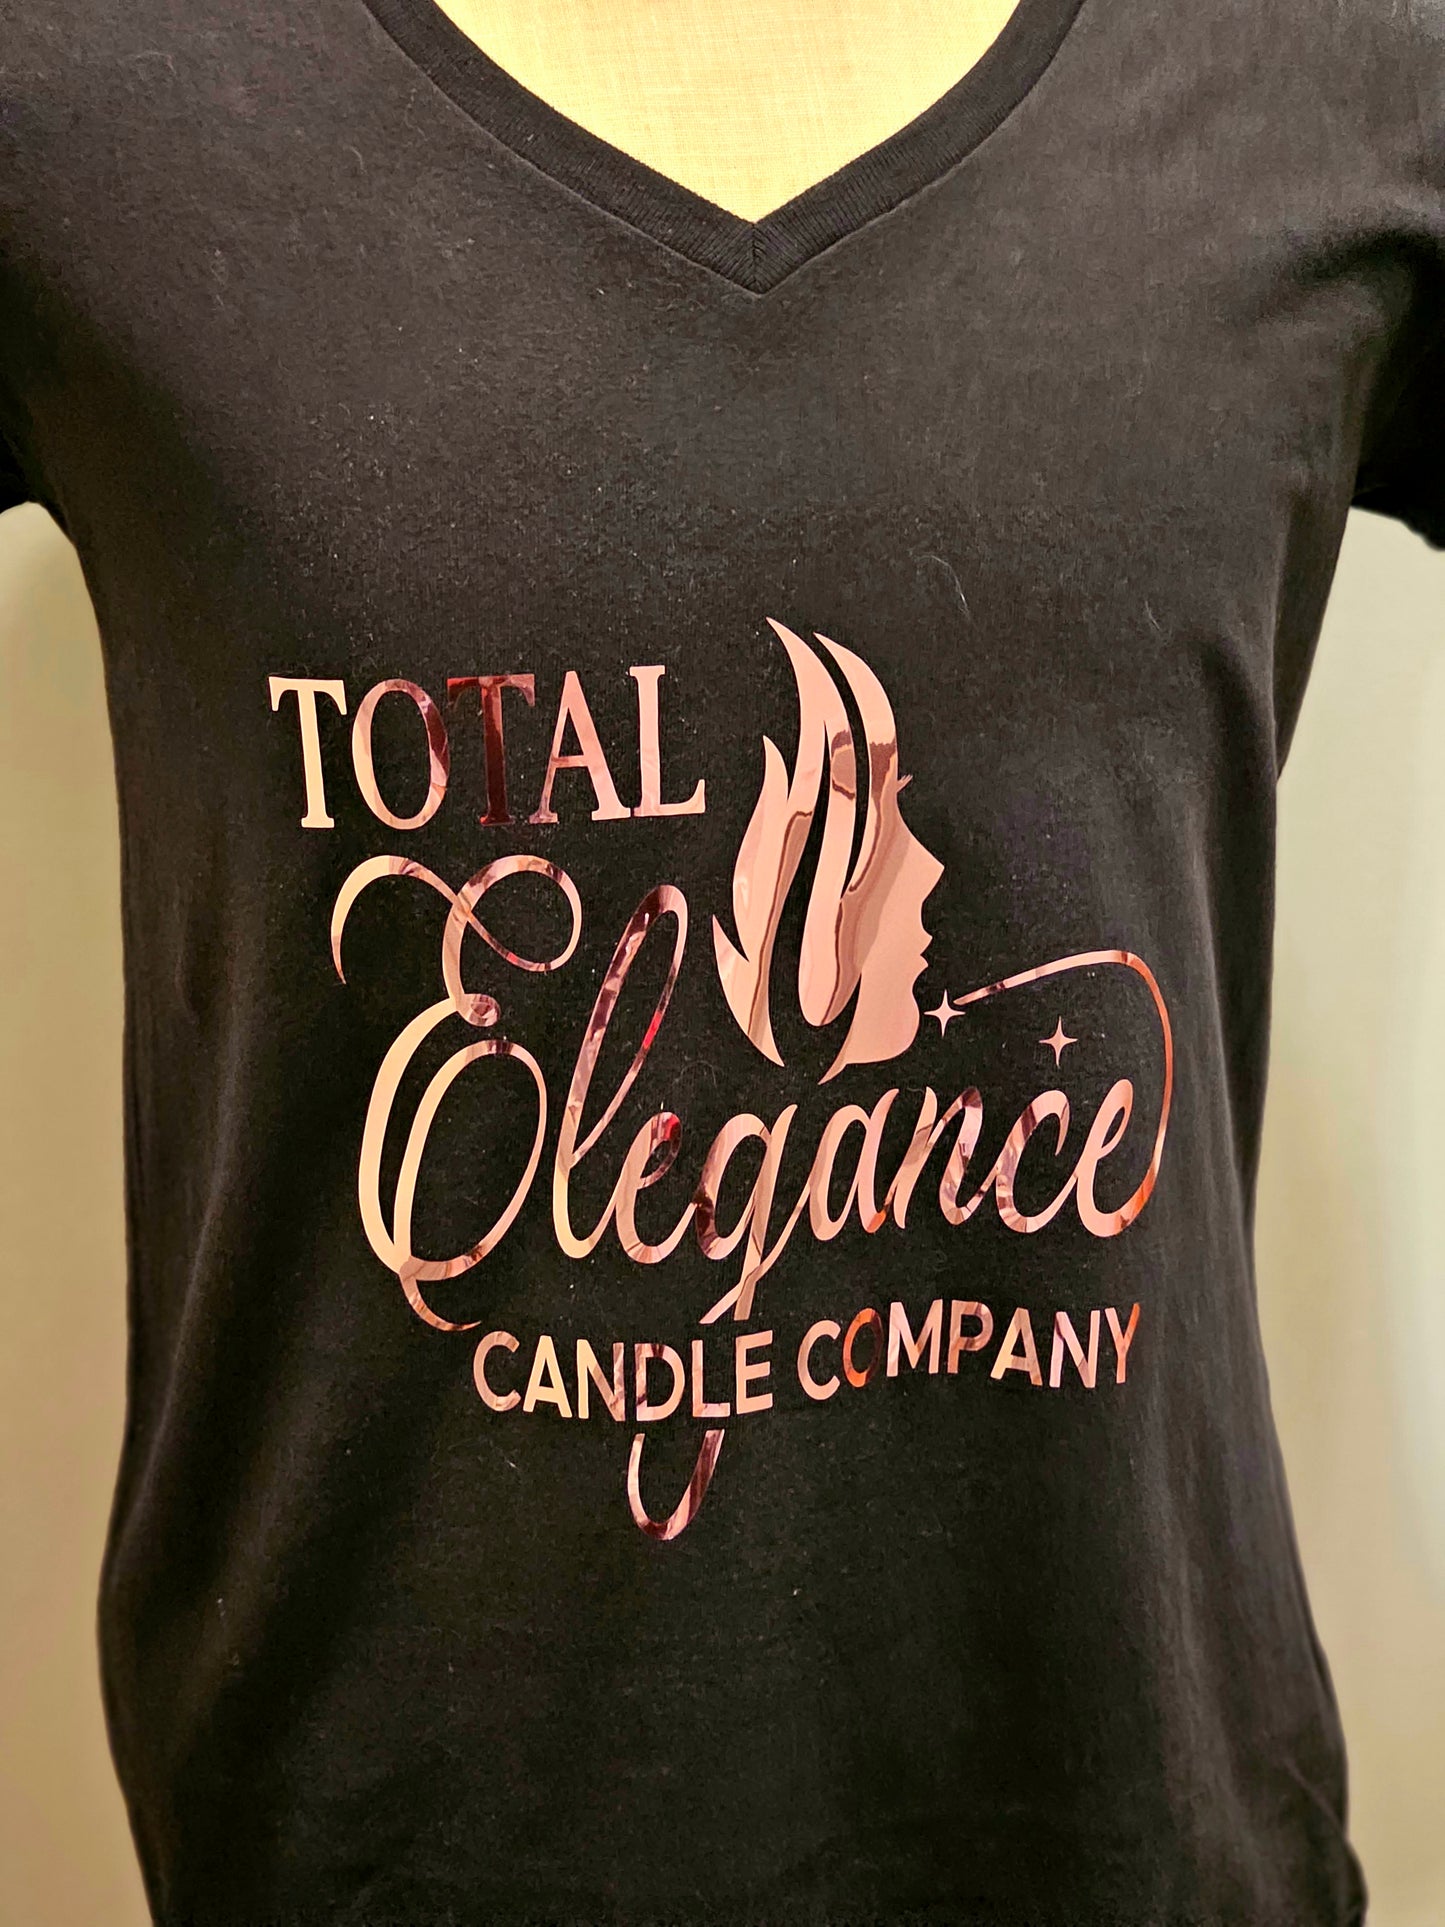 Total Elegance Candle Company